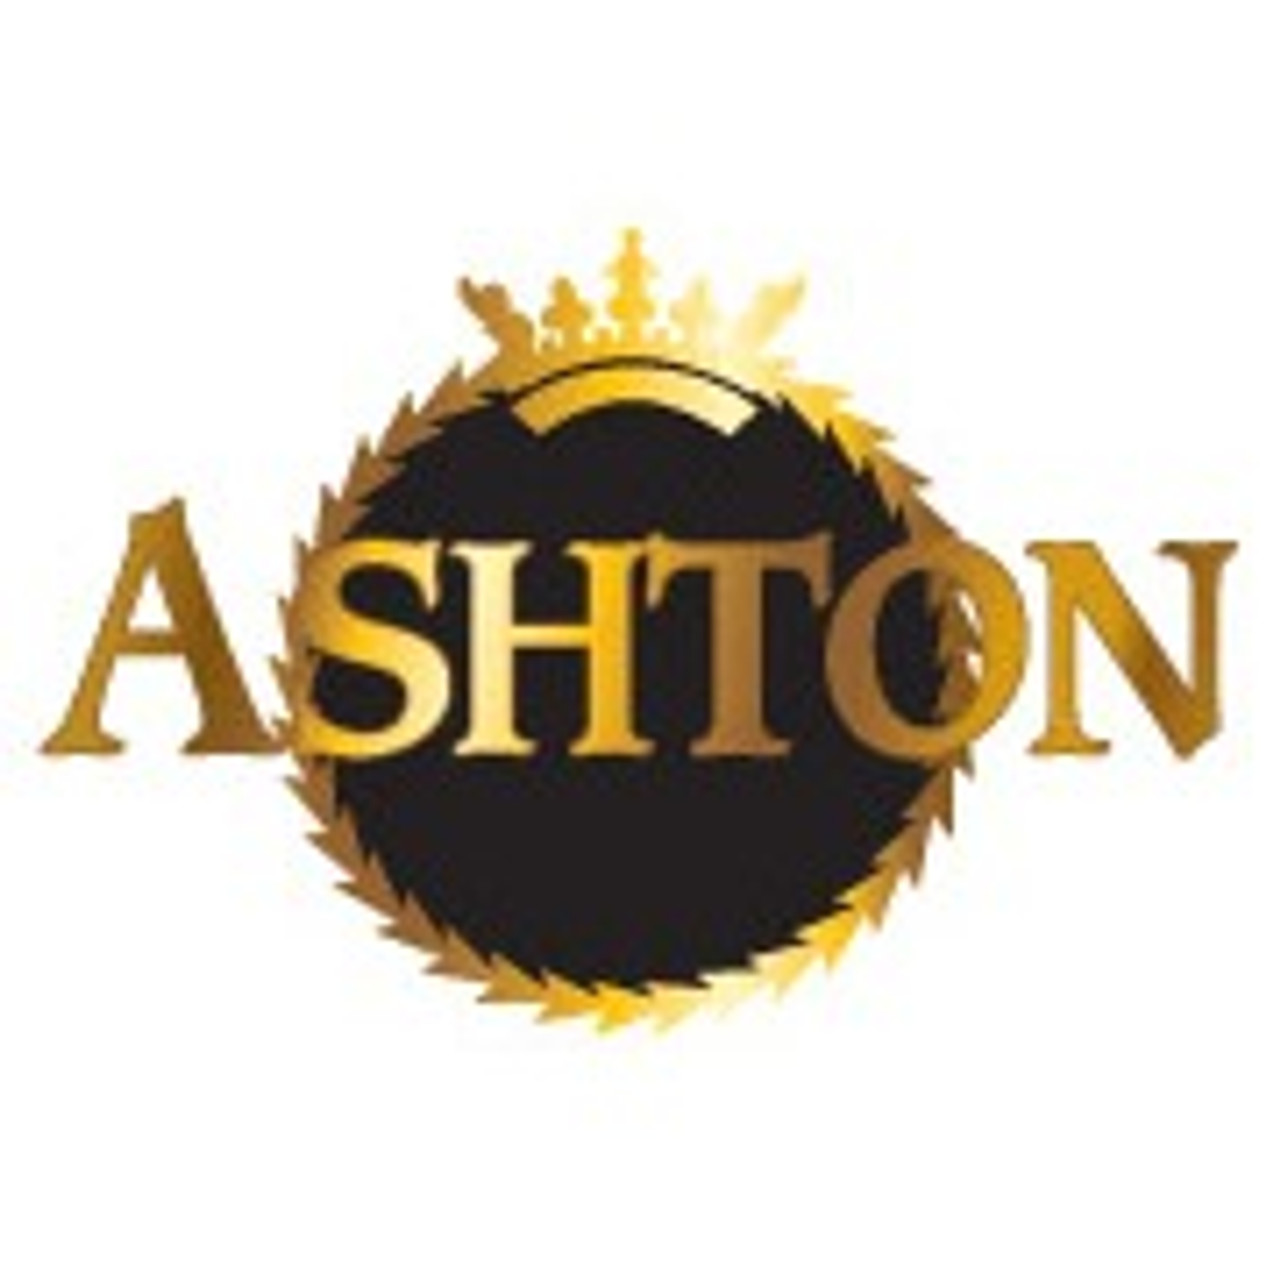 Ashton Corona Cigars - 5 x 44 (Cedar Chest of 25)